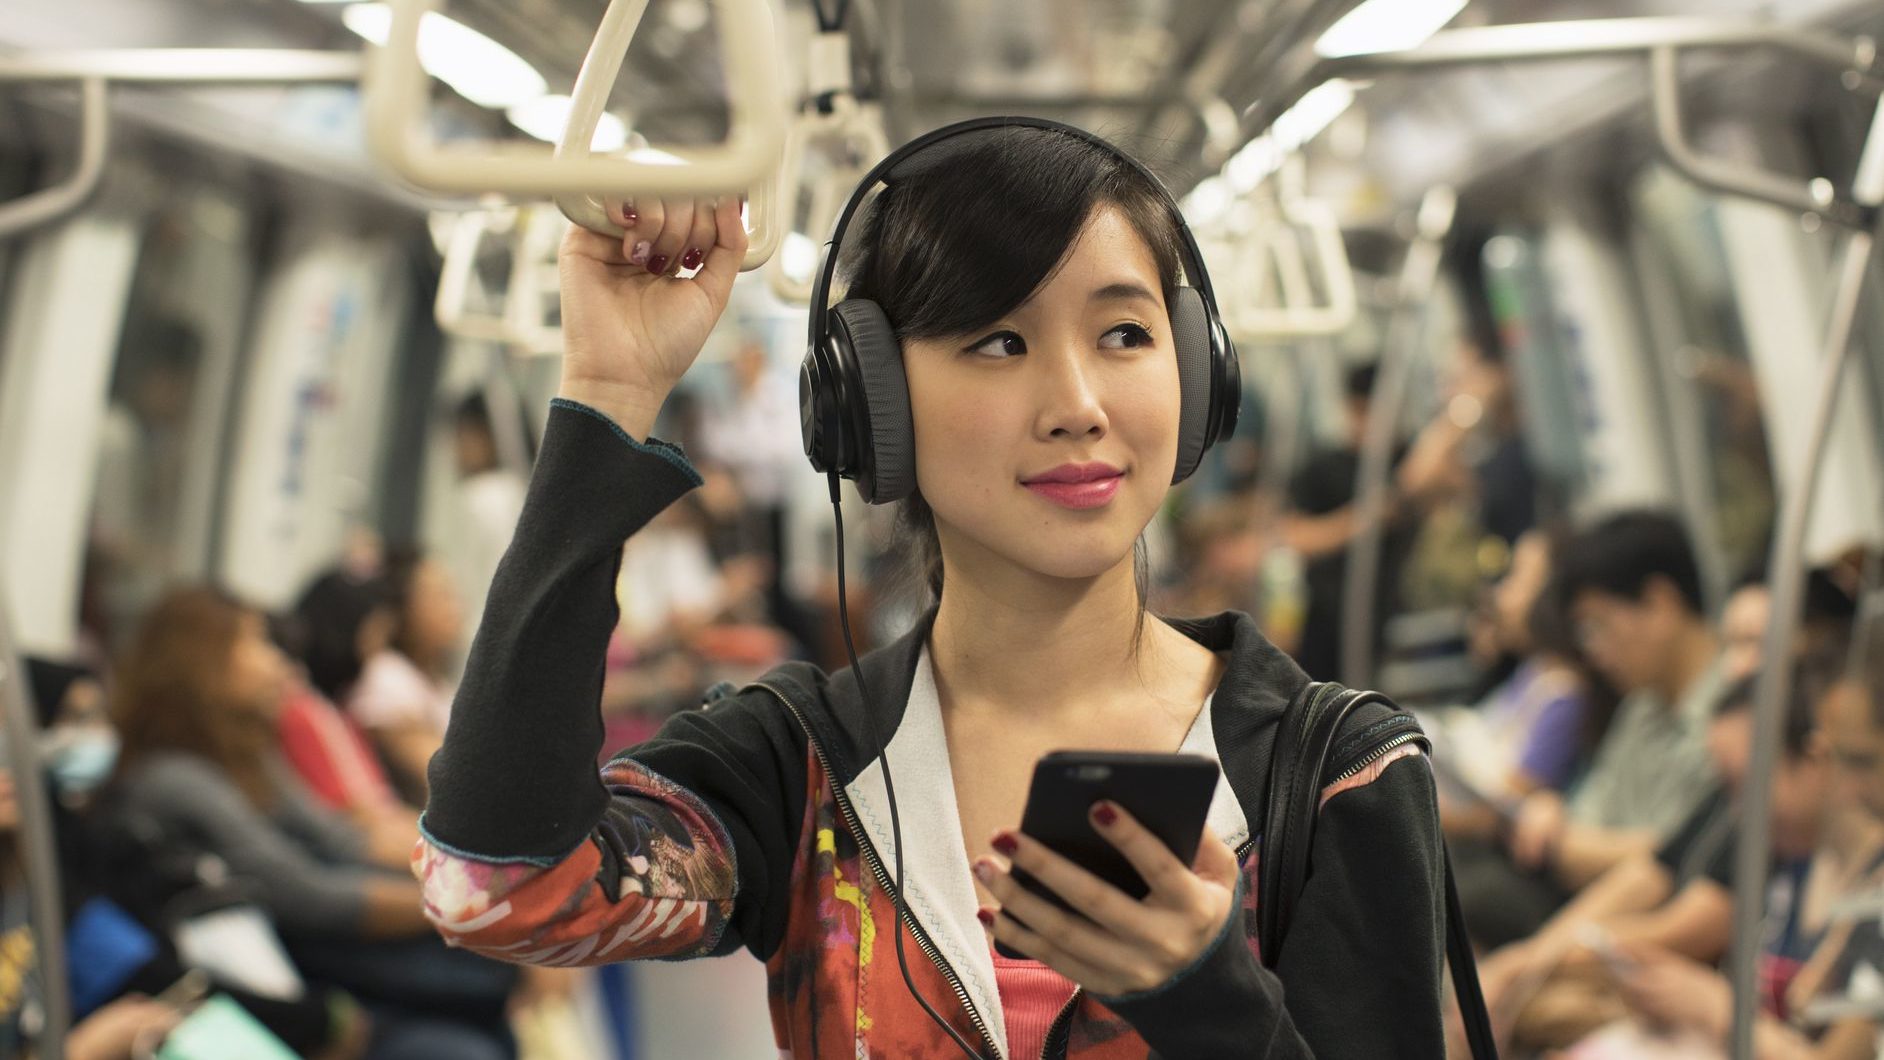 She loves to music. Японские девушки в метро. Listen to the Music. Фото на телефон. People listen to Music.